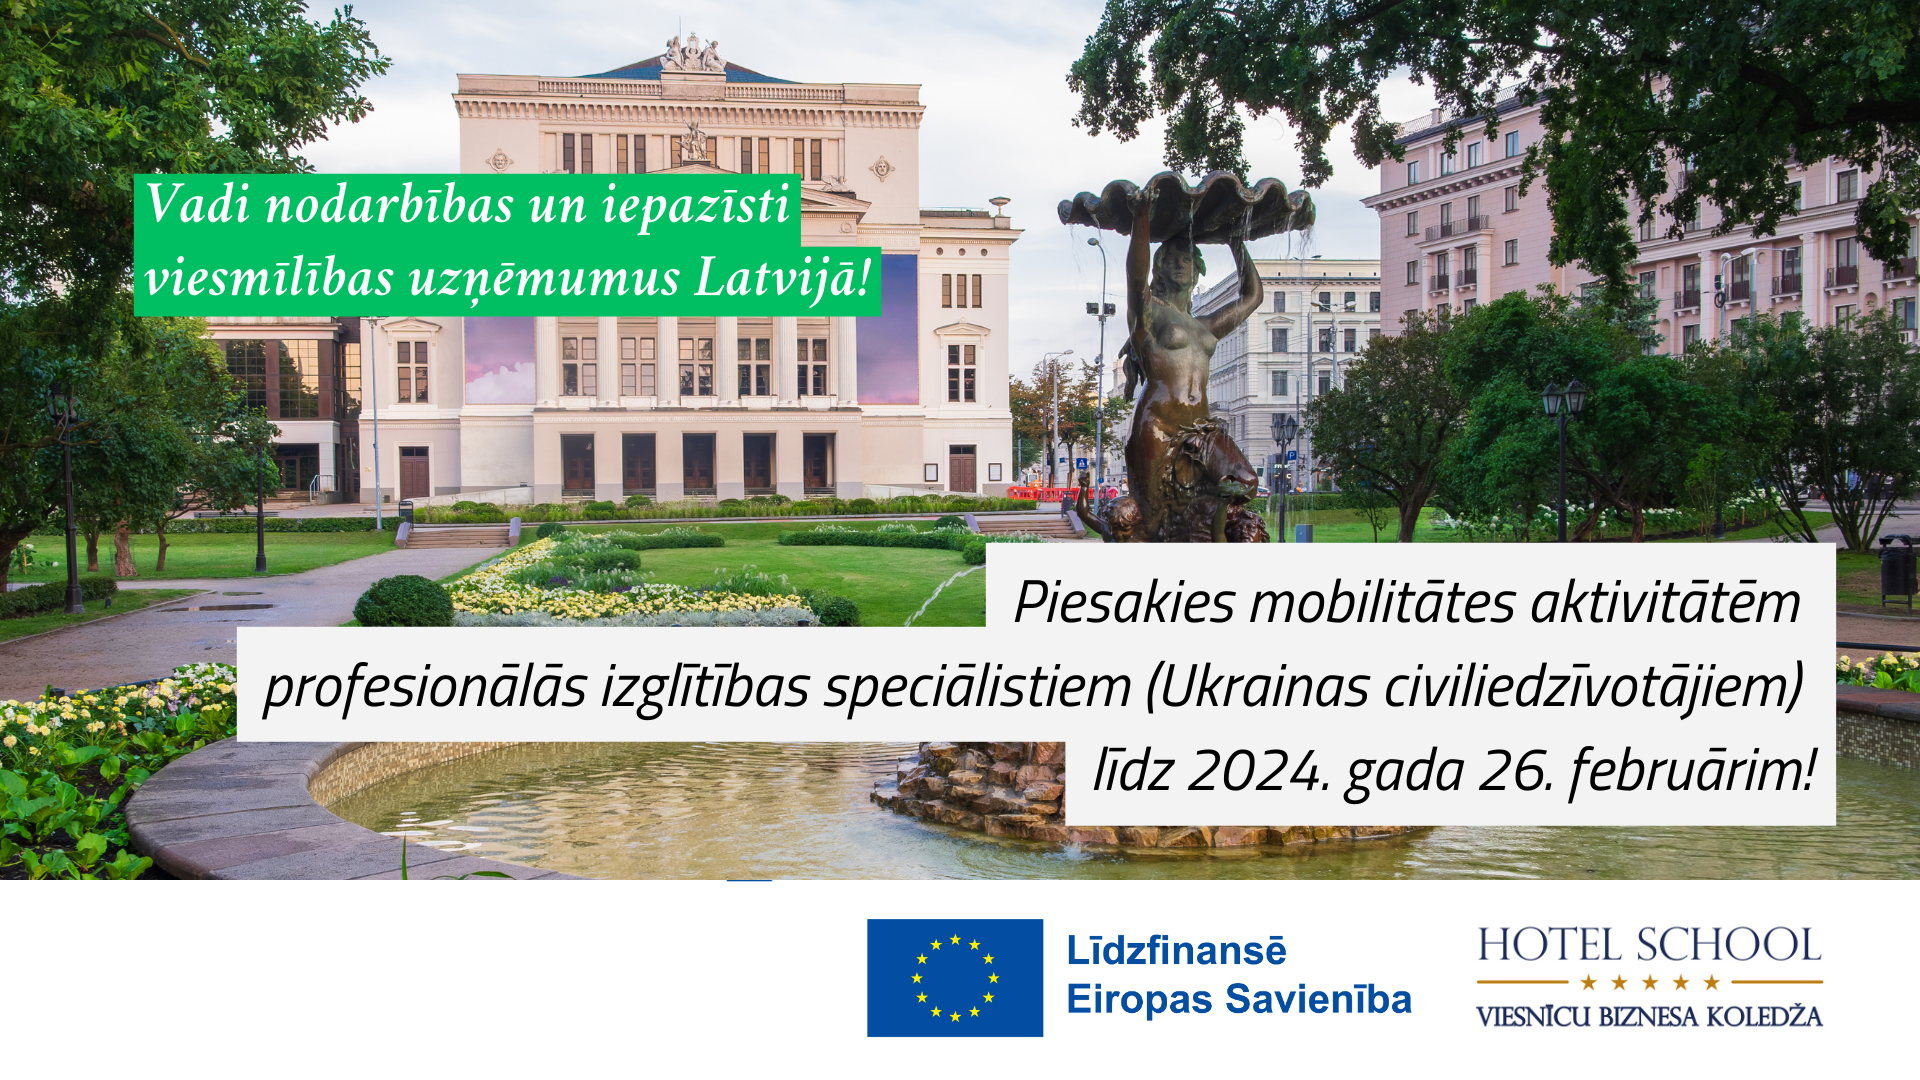 Erasmus VET specialist teaching mobility for Ukrainian civilians Call 3 (No. 2022-1-LV01-KA121-VET-000055728)